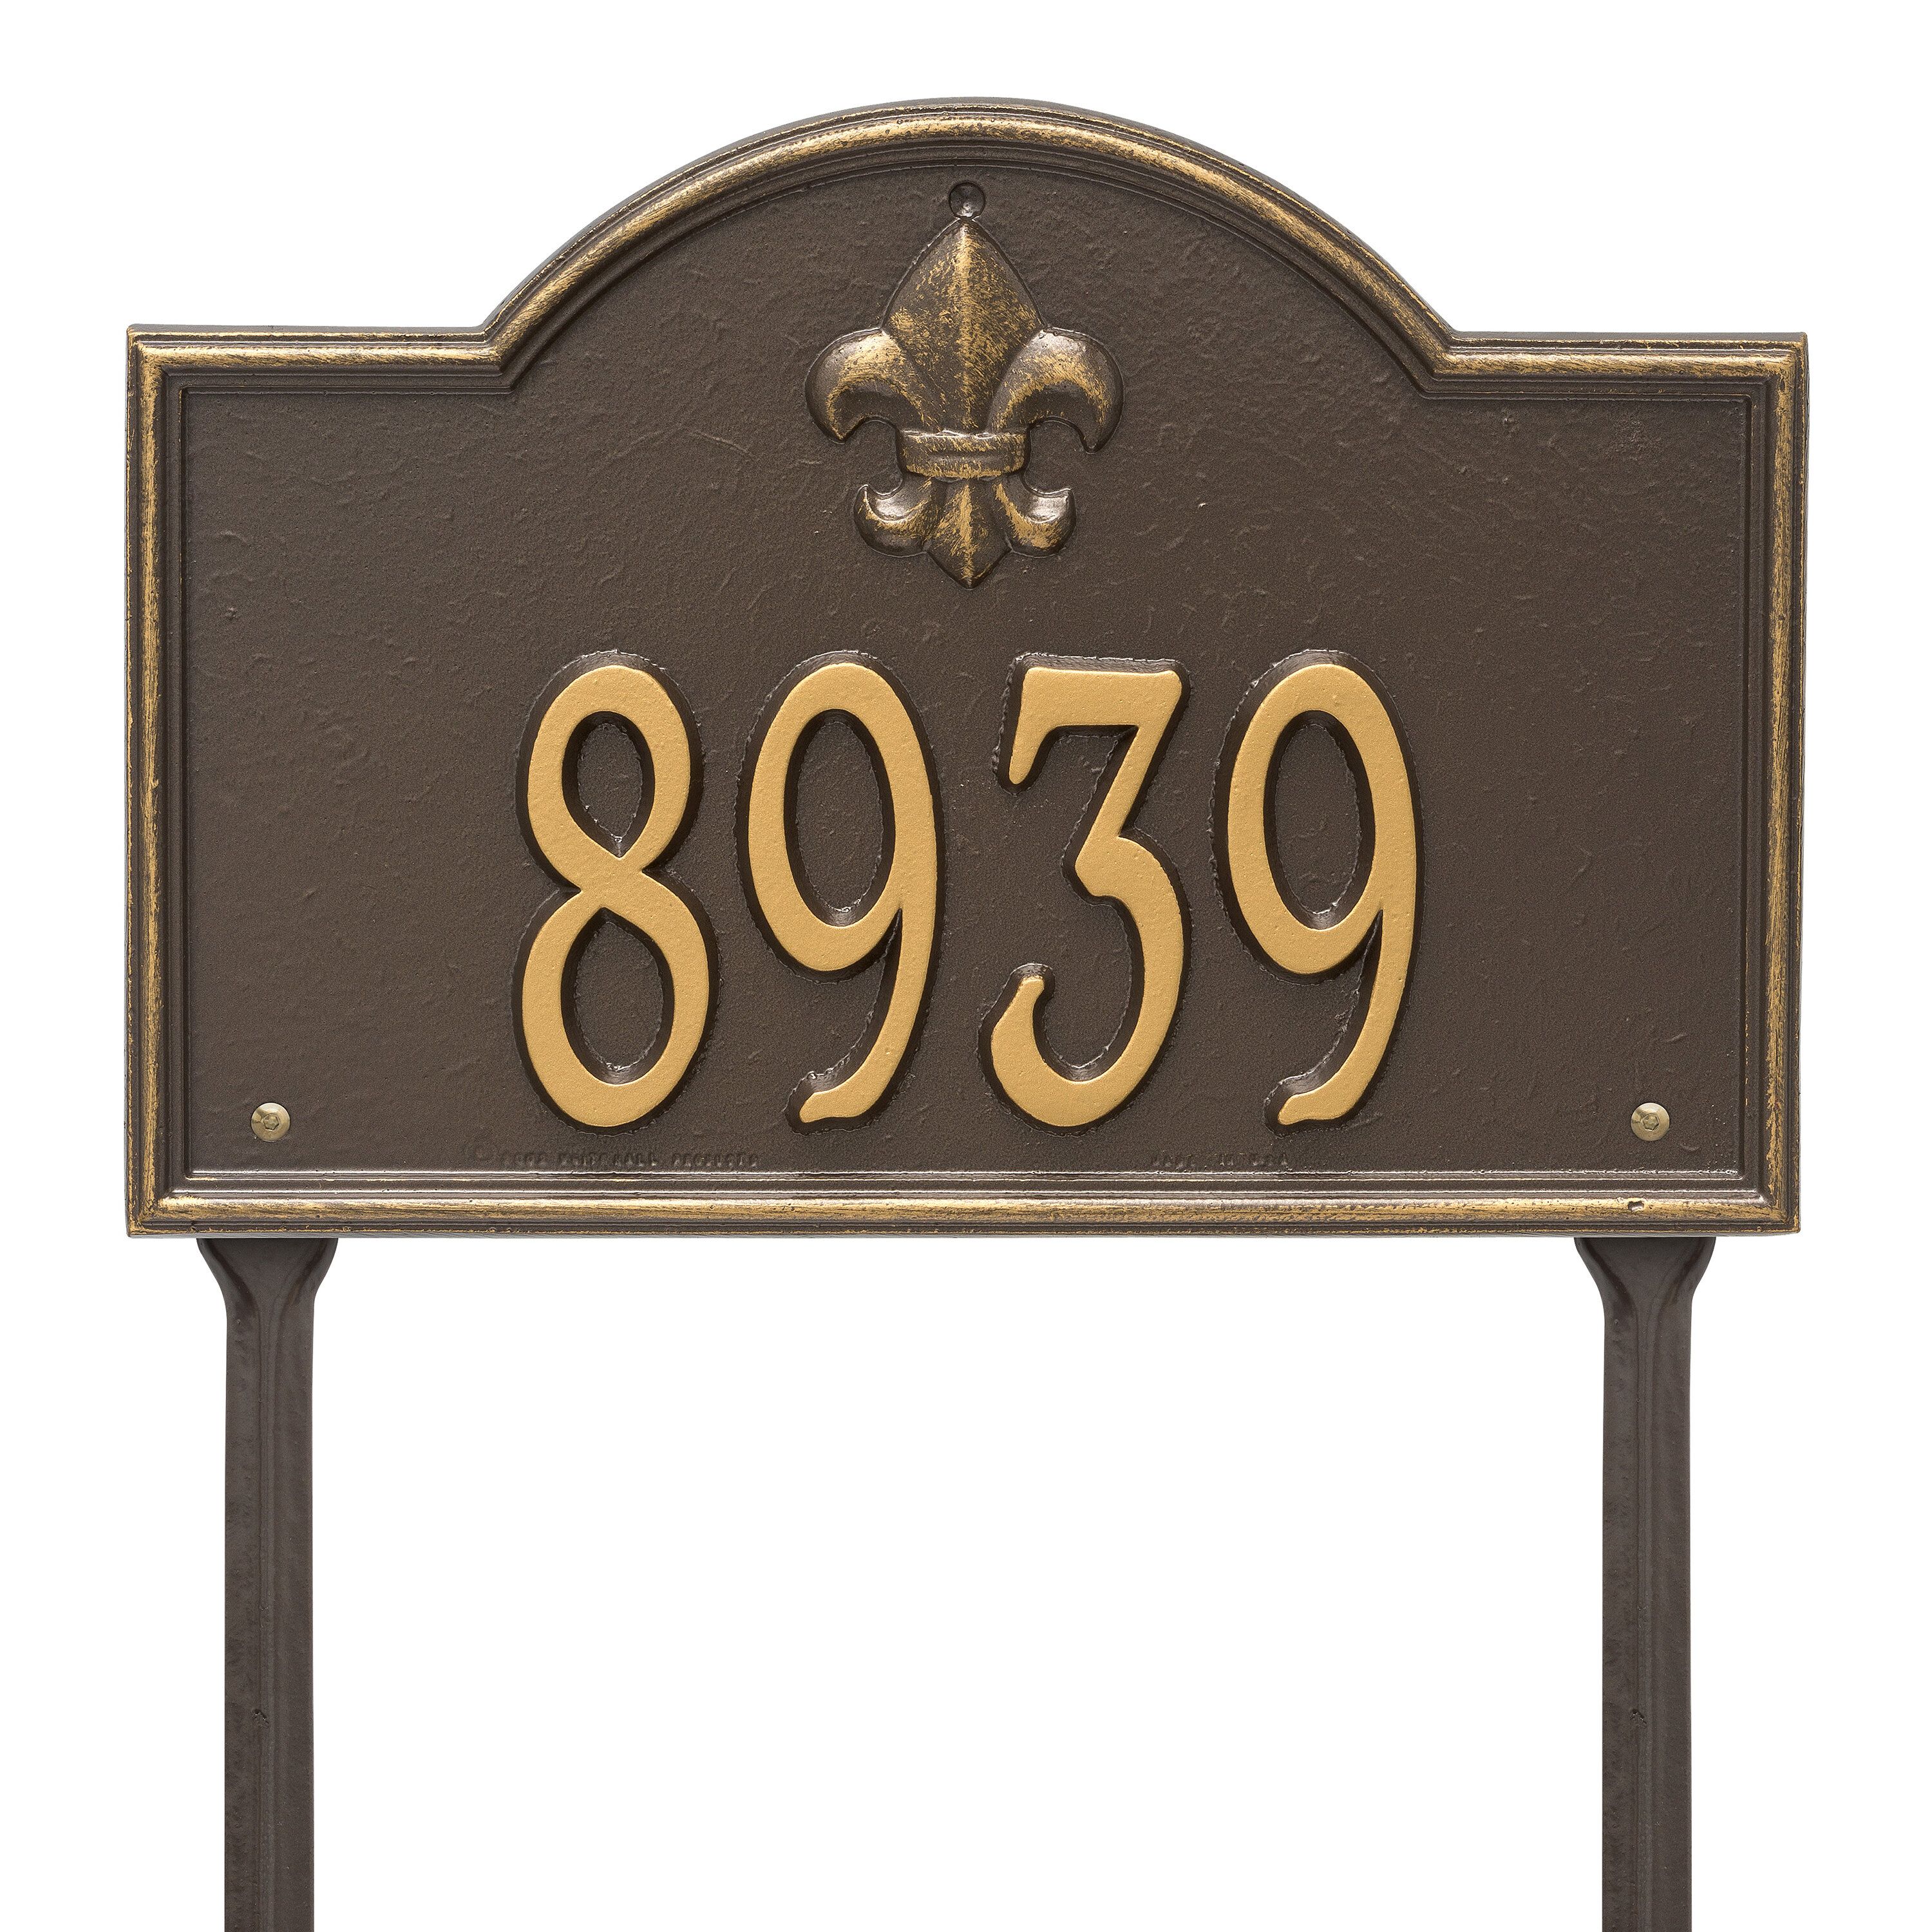 Whitehall Bayou Vista - Standard Lawn - One Line Address Plaque